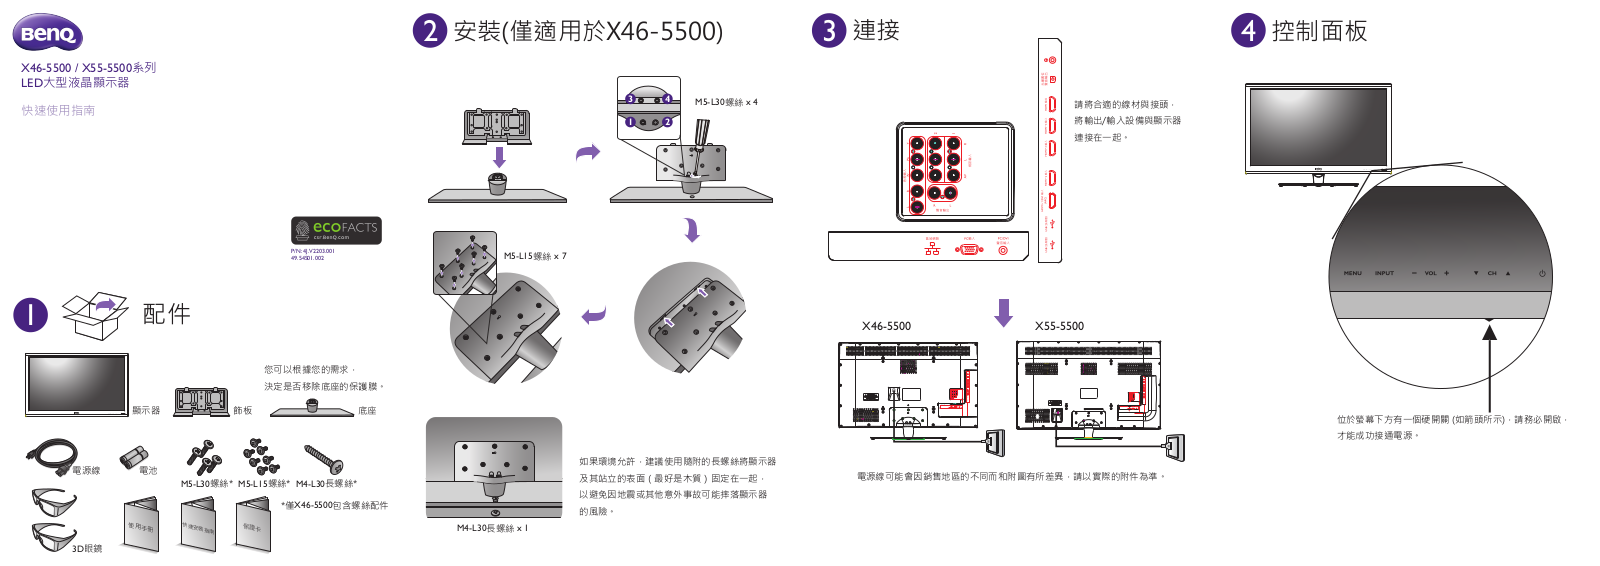 Benq X46-5500, X55-5500 User Manual